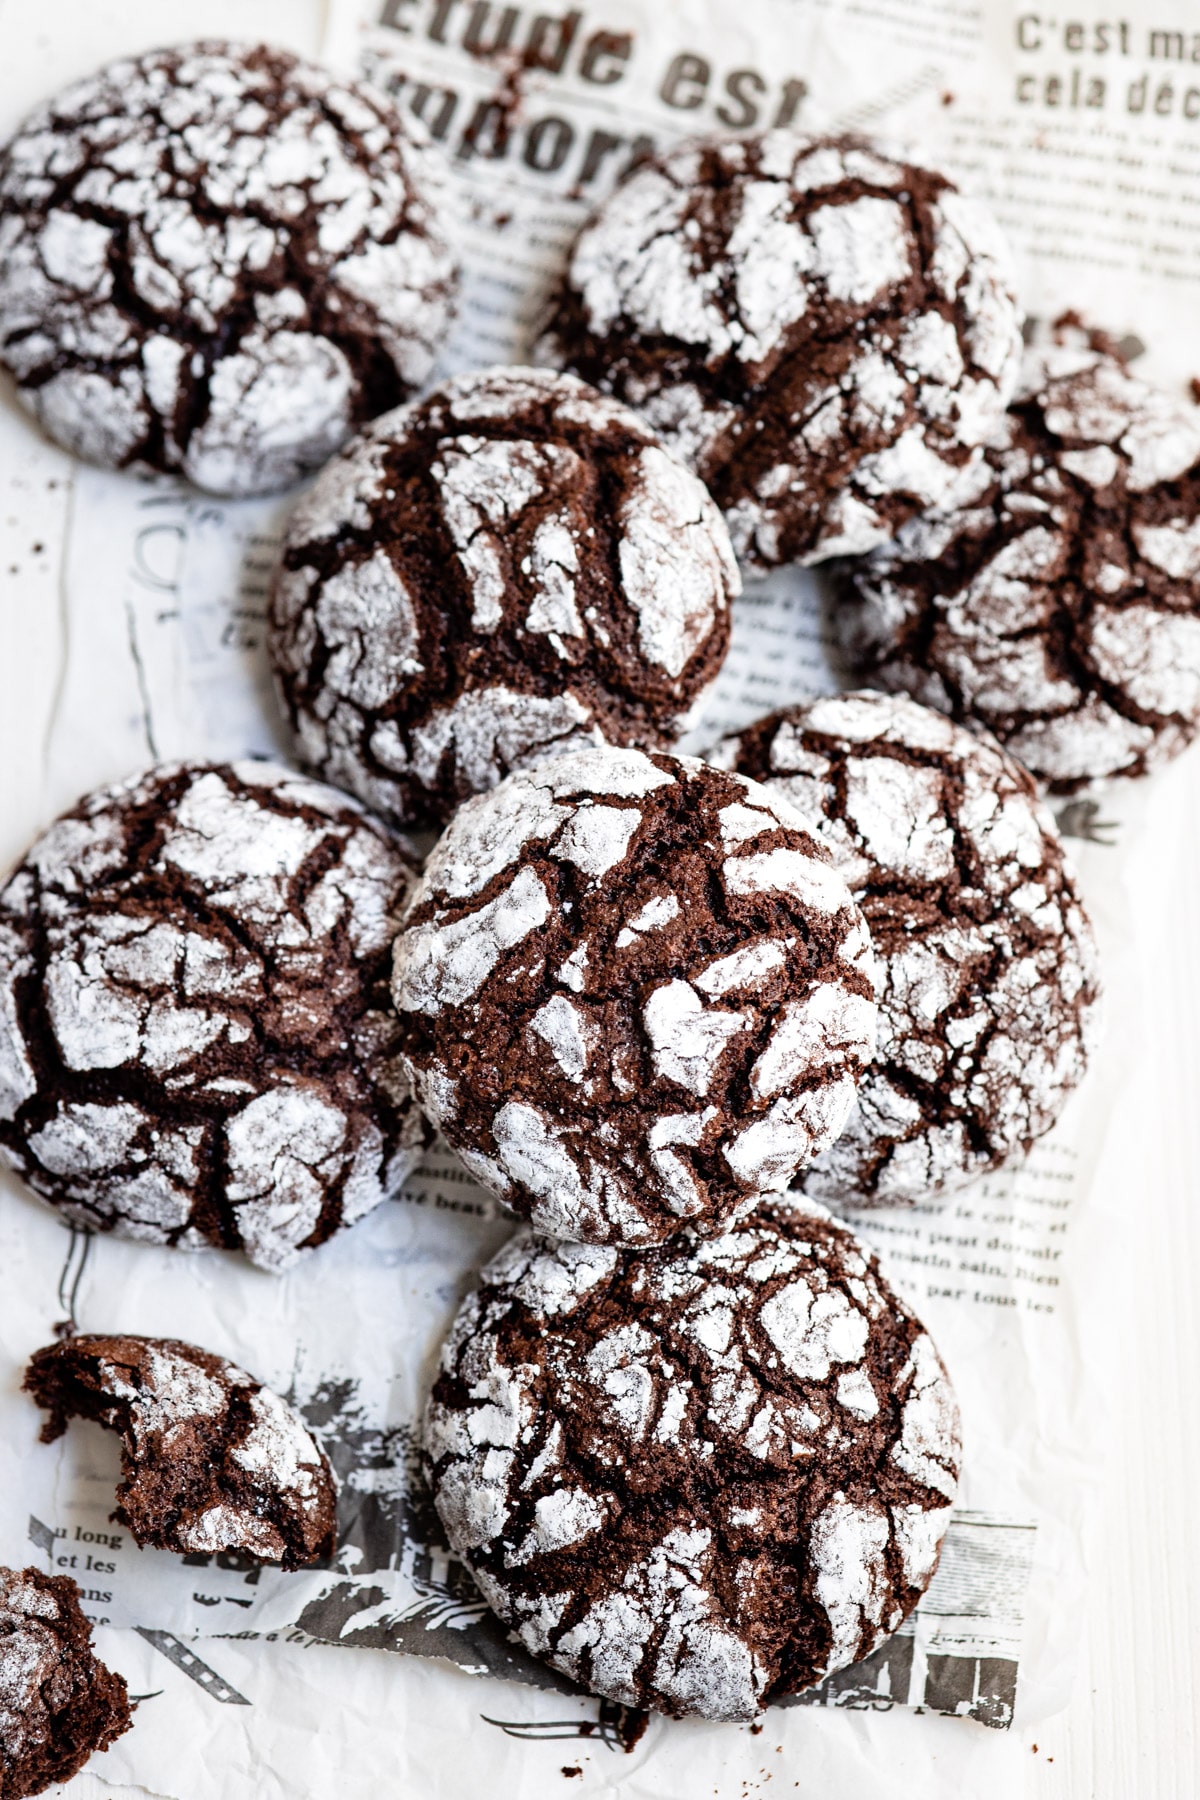 Stack of chocolate crinkle cookies on newsprint.